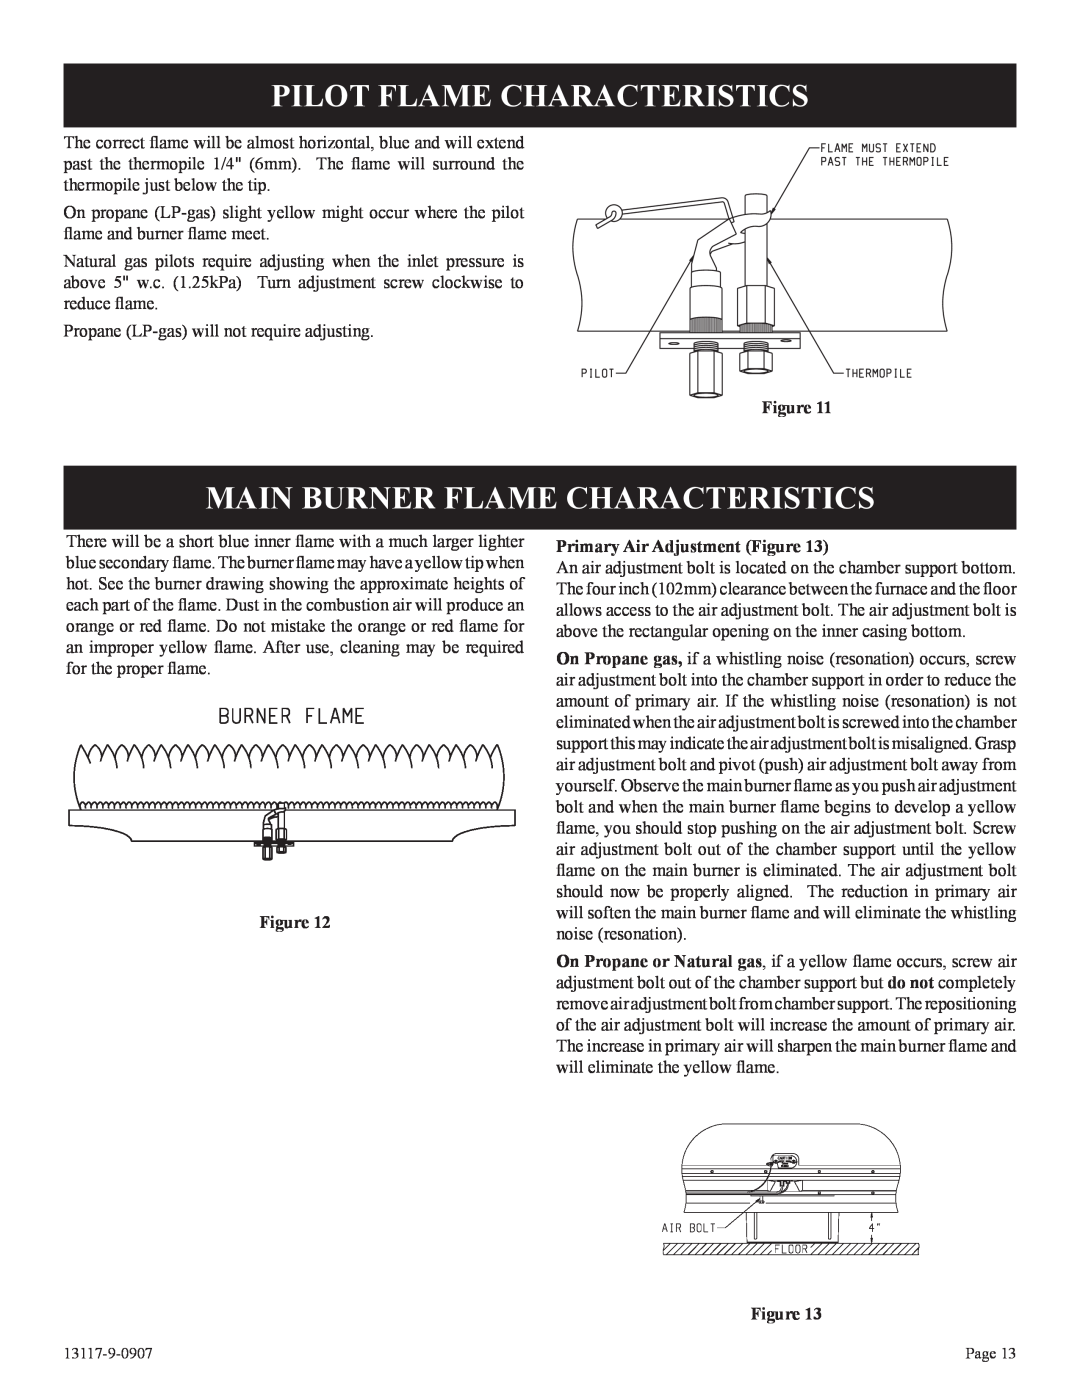 Empire Products DV-25T-1 Pilot Flame Characteristics, Main Burner Flame Characteristics, Primary Air Adjustment Figure 